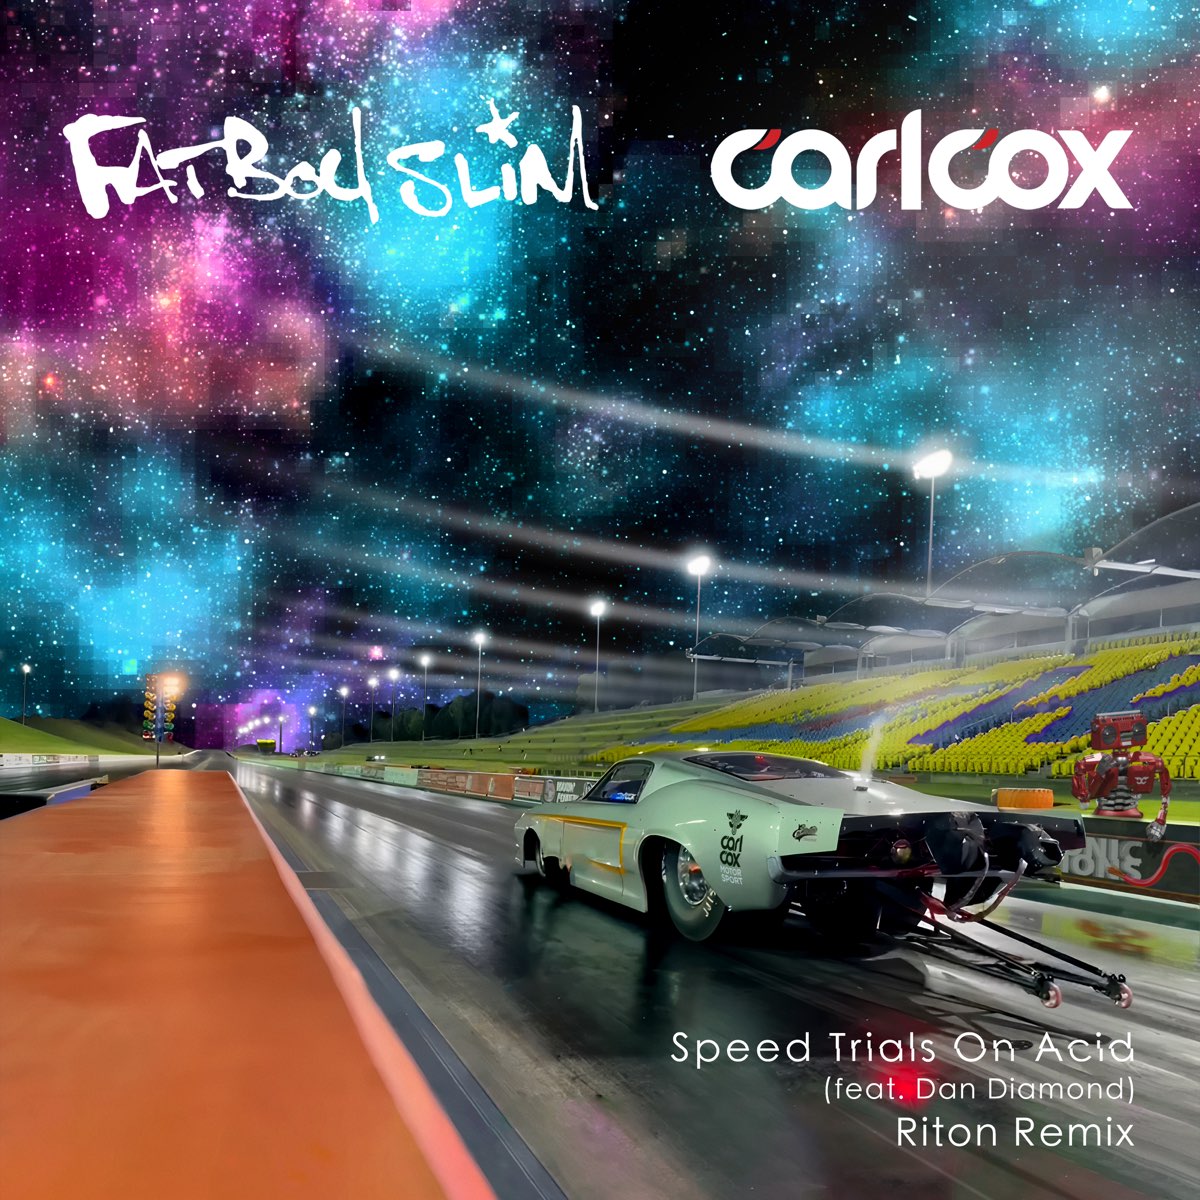 Fatboy Slim & Carl Cox featuring Dan Diamond — Speed Trials On Acid (Riton Remix) cover artwork